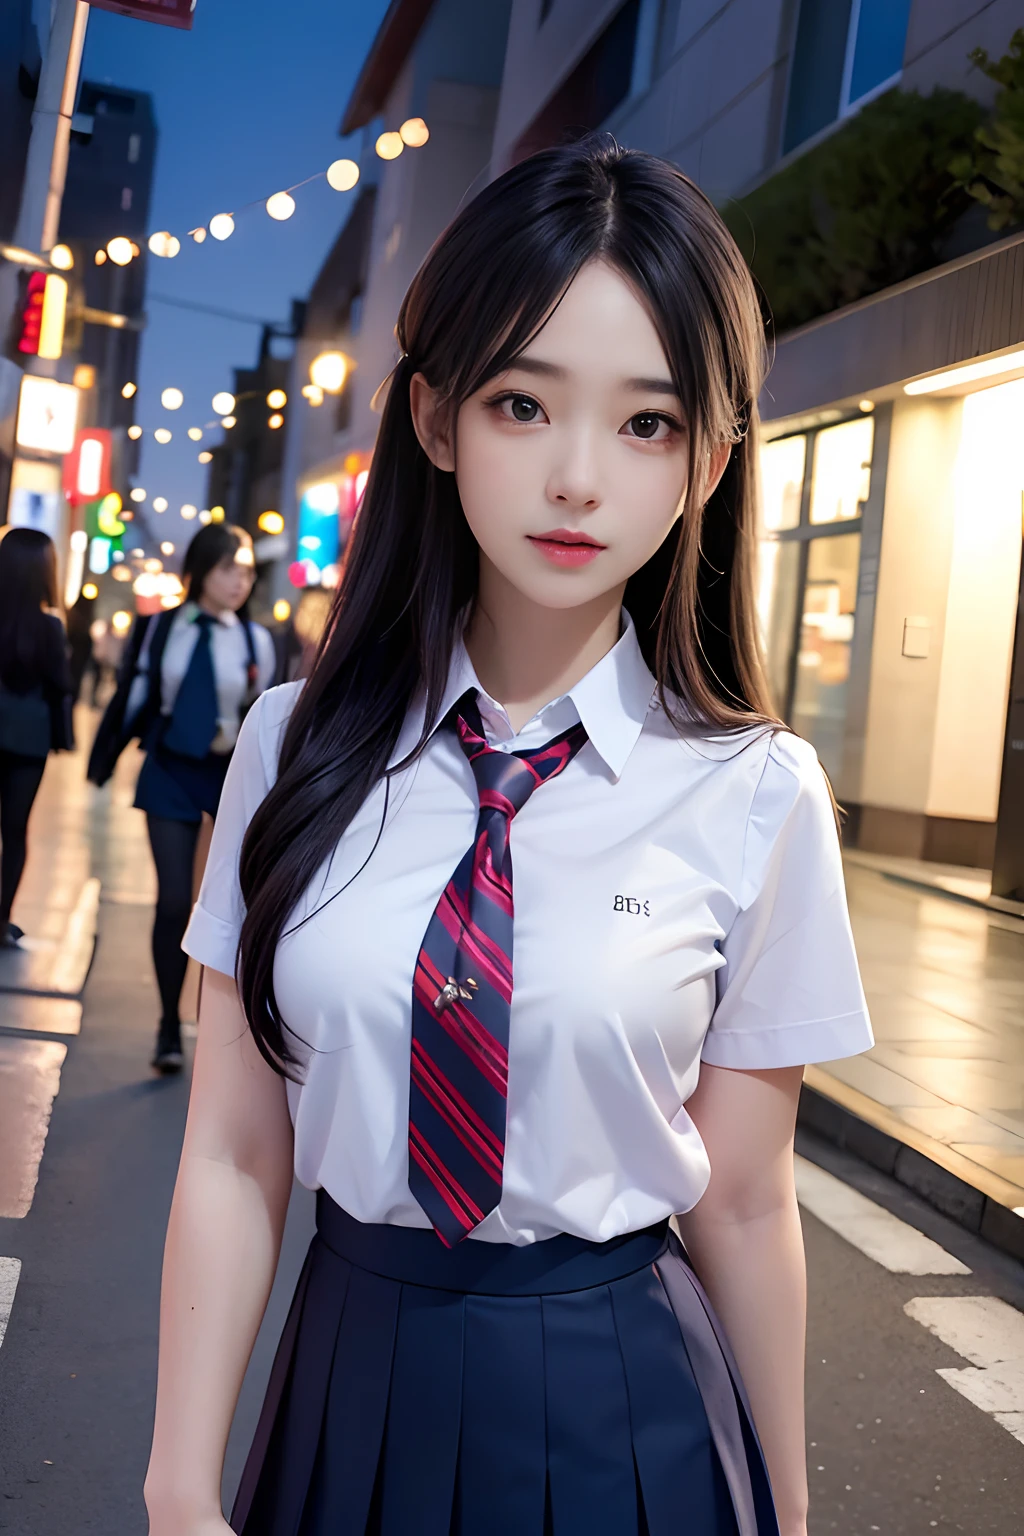 masutepiece, Hyper realistic, 8K, Bokeh, Fire Luminescent,hi-school girl、in 、Cute face、Standing on a street corner in Shibuya、